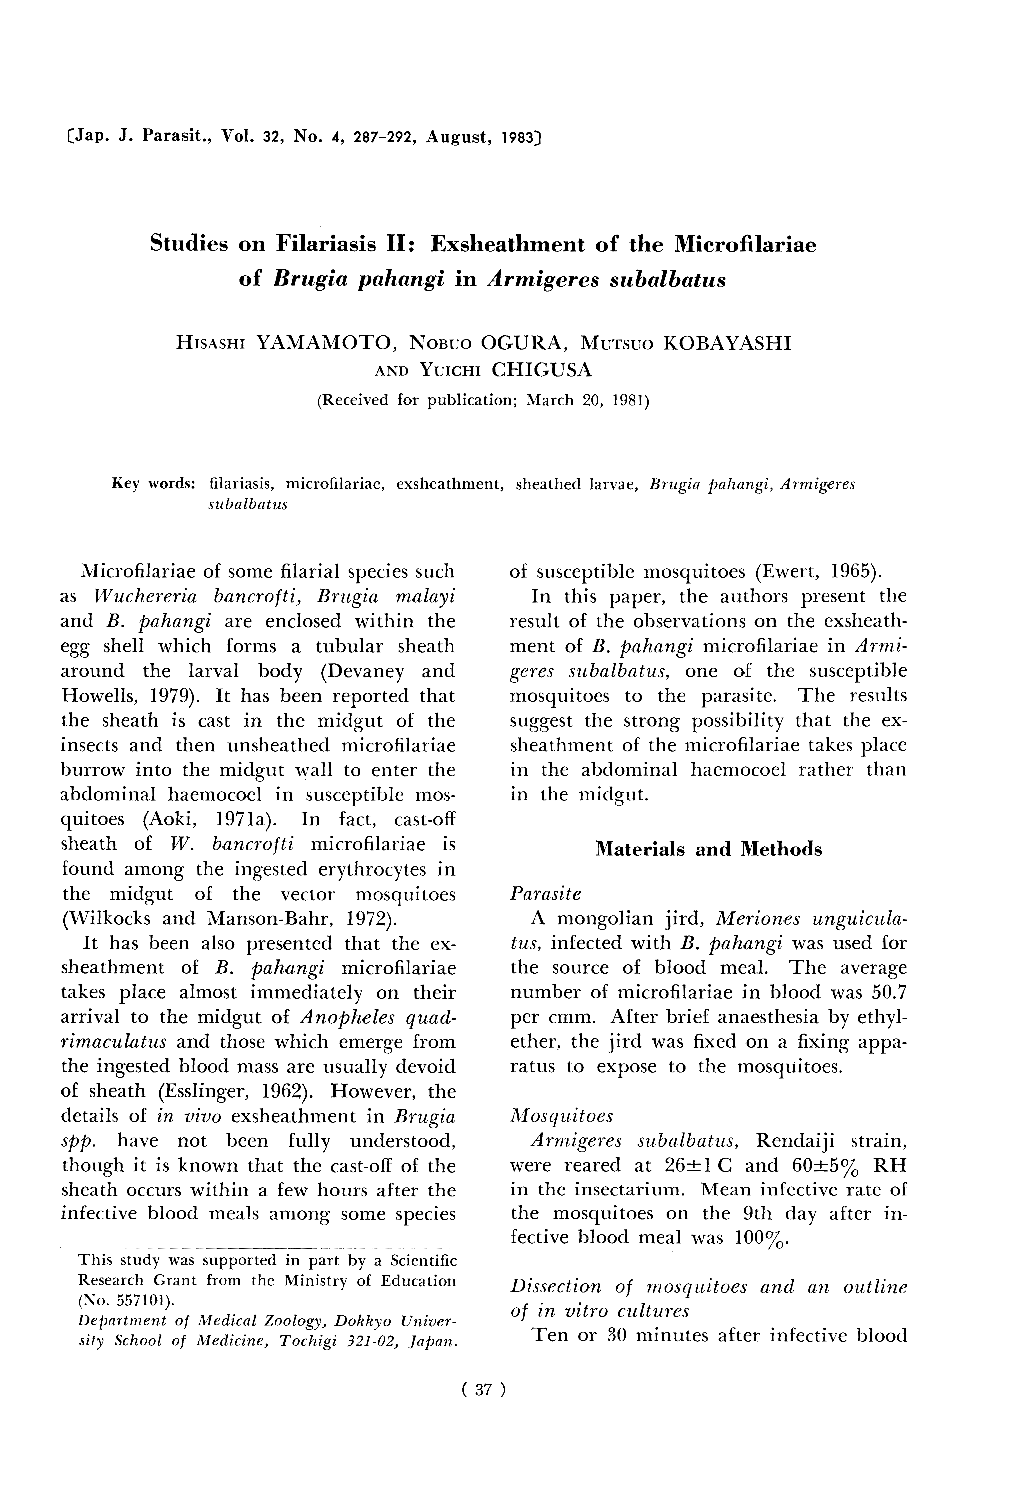 Exsheathment of the Microfilariae of Brugia Pahangi in Armigeres Subalbatus